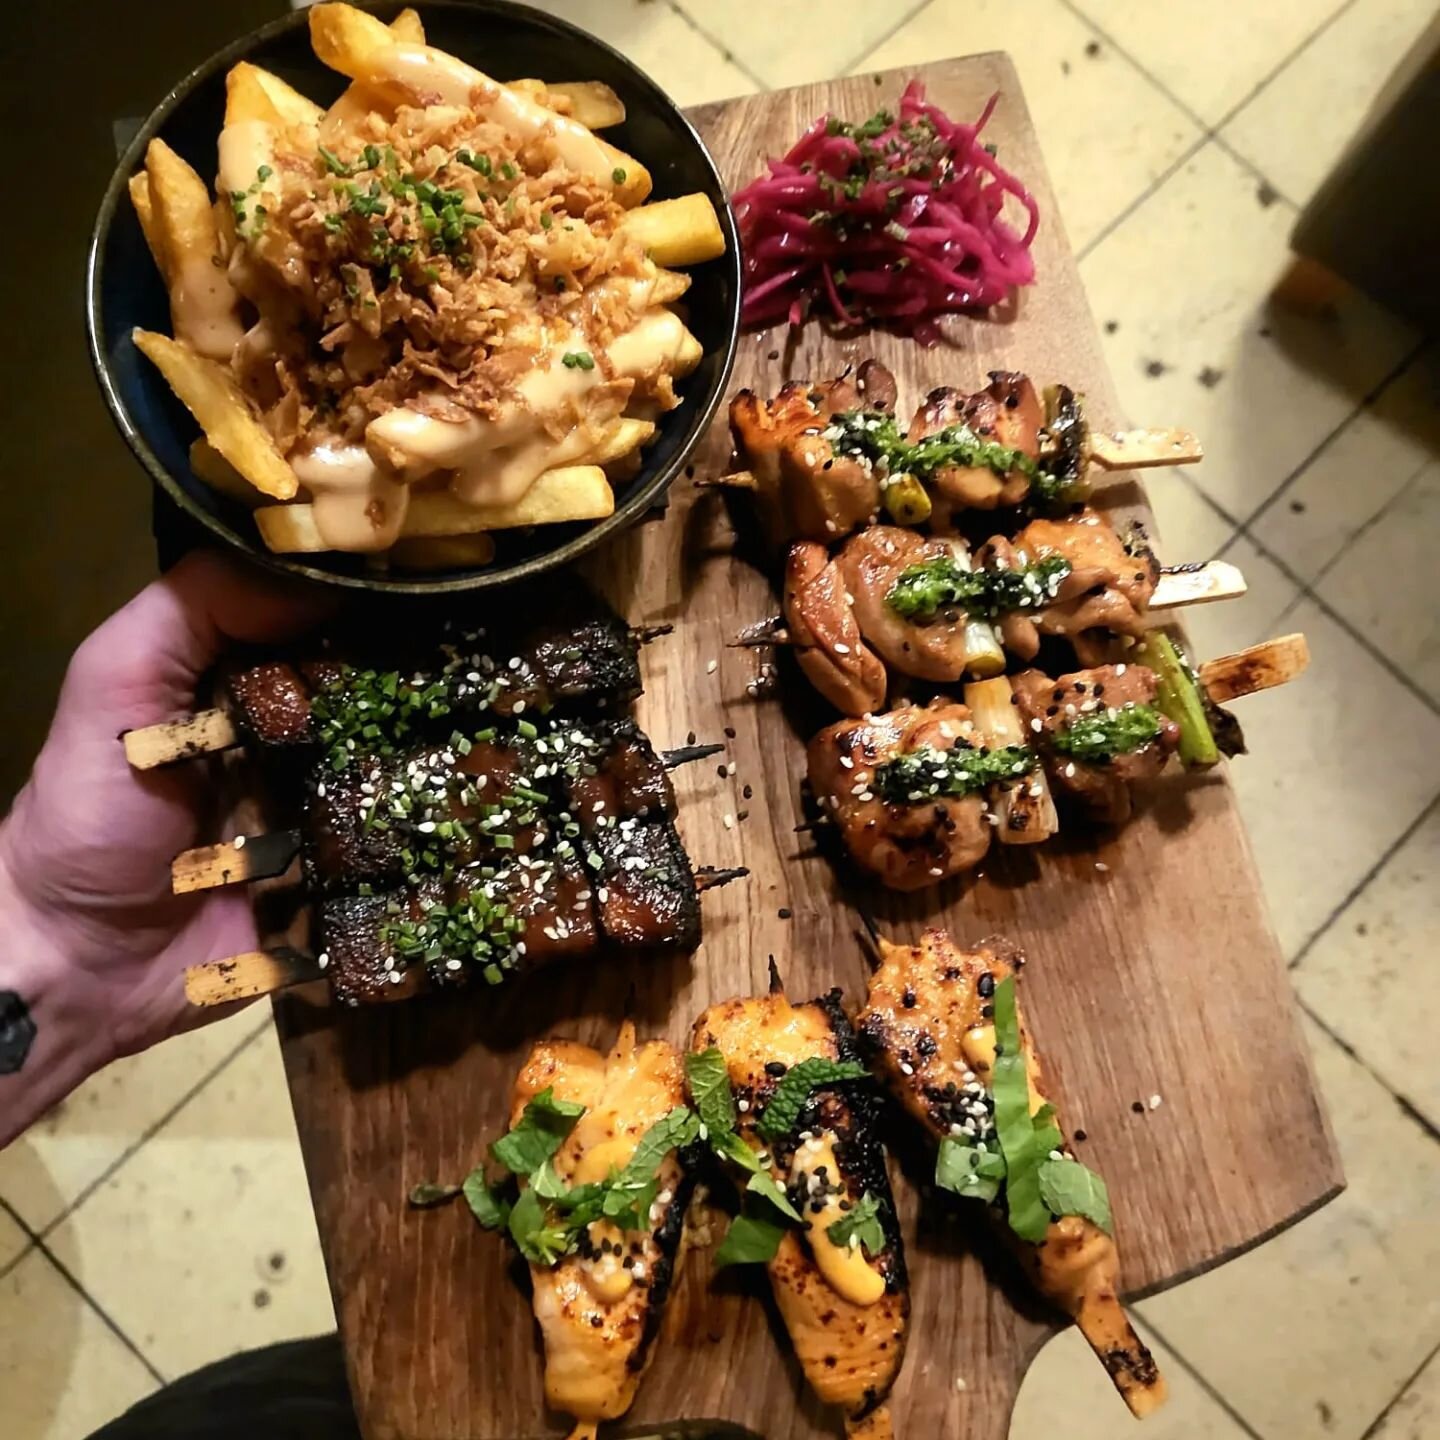 The perfect lunch doesn't exi...
.
.
.
#pubbadgerbadger #deptfordhighstreet #yakitori #londonpubs #southeastlondonfood #deptfordfood #dinnerideas #foodiegram #pub #kitchen #foodporn #japanesestreetfood